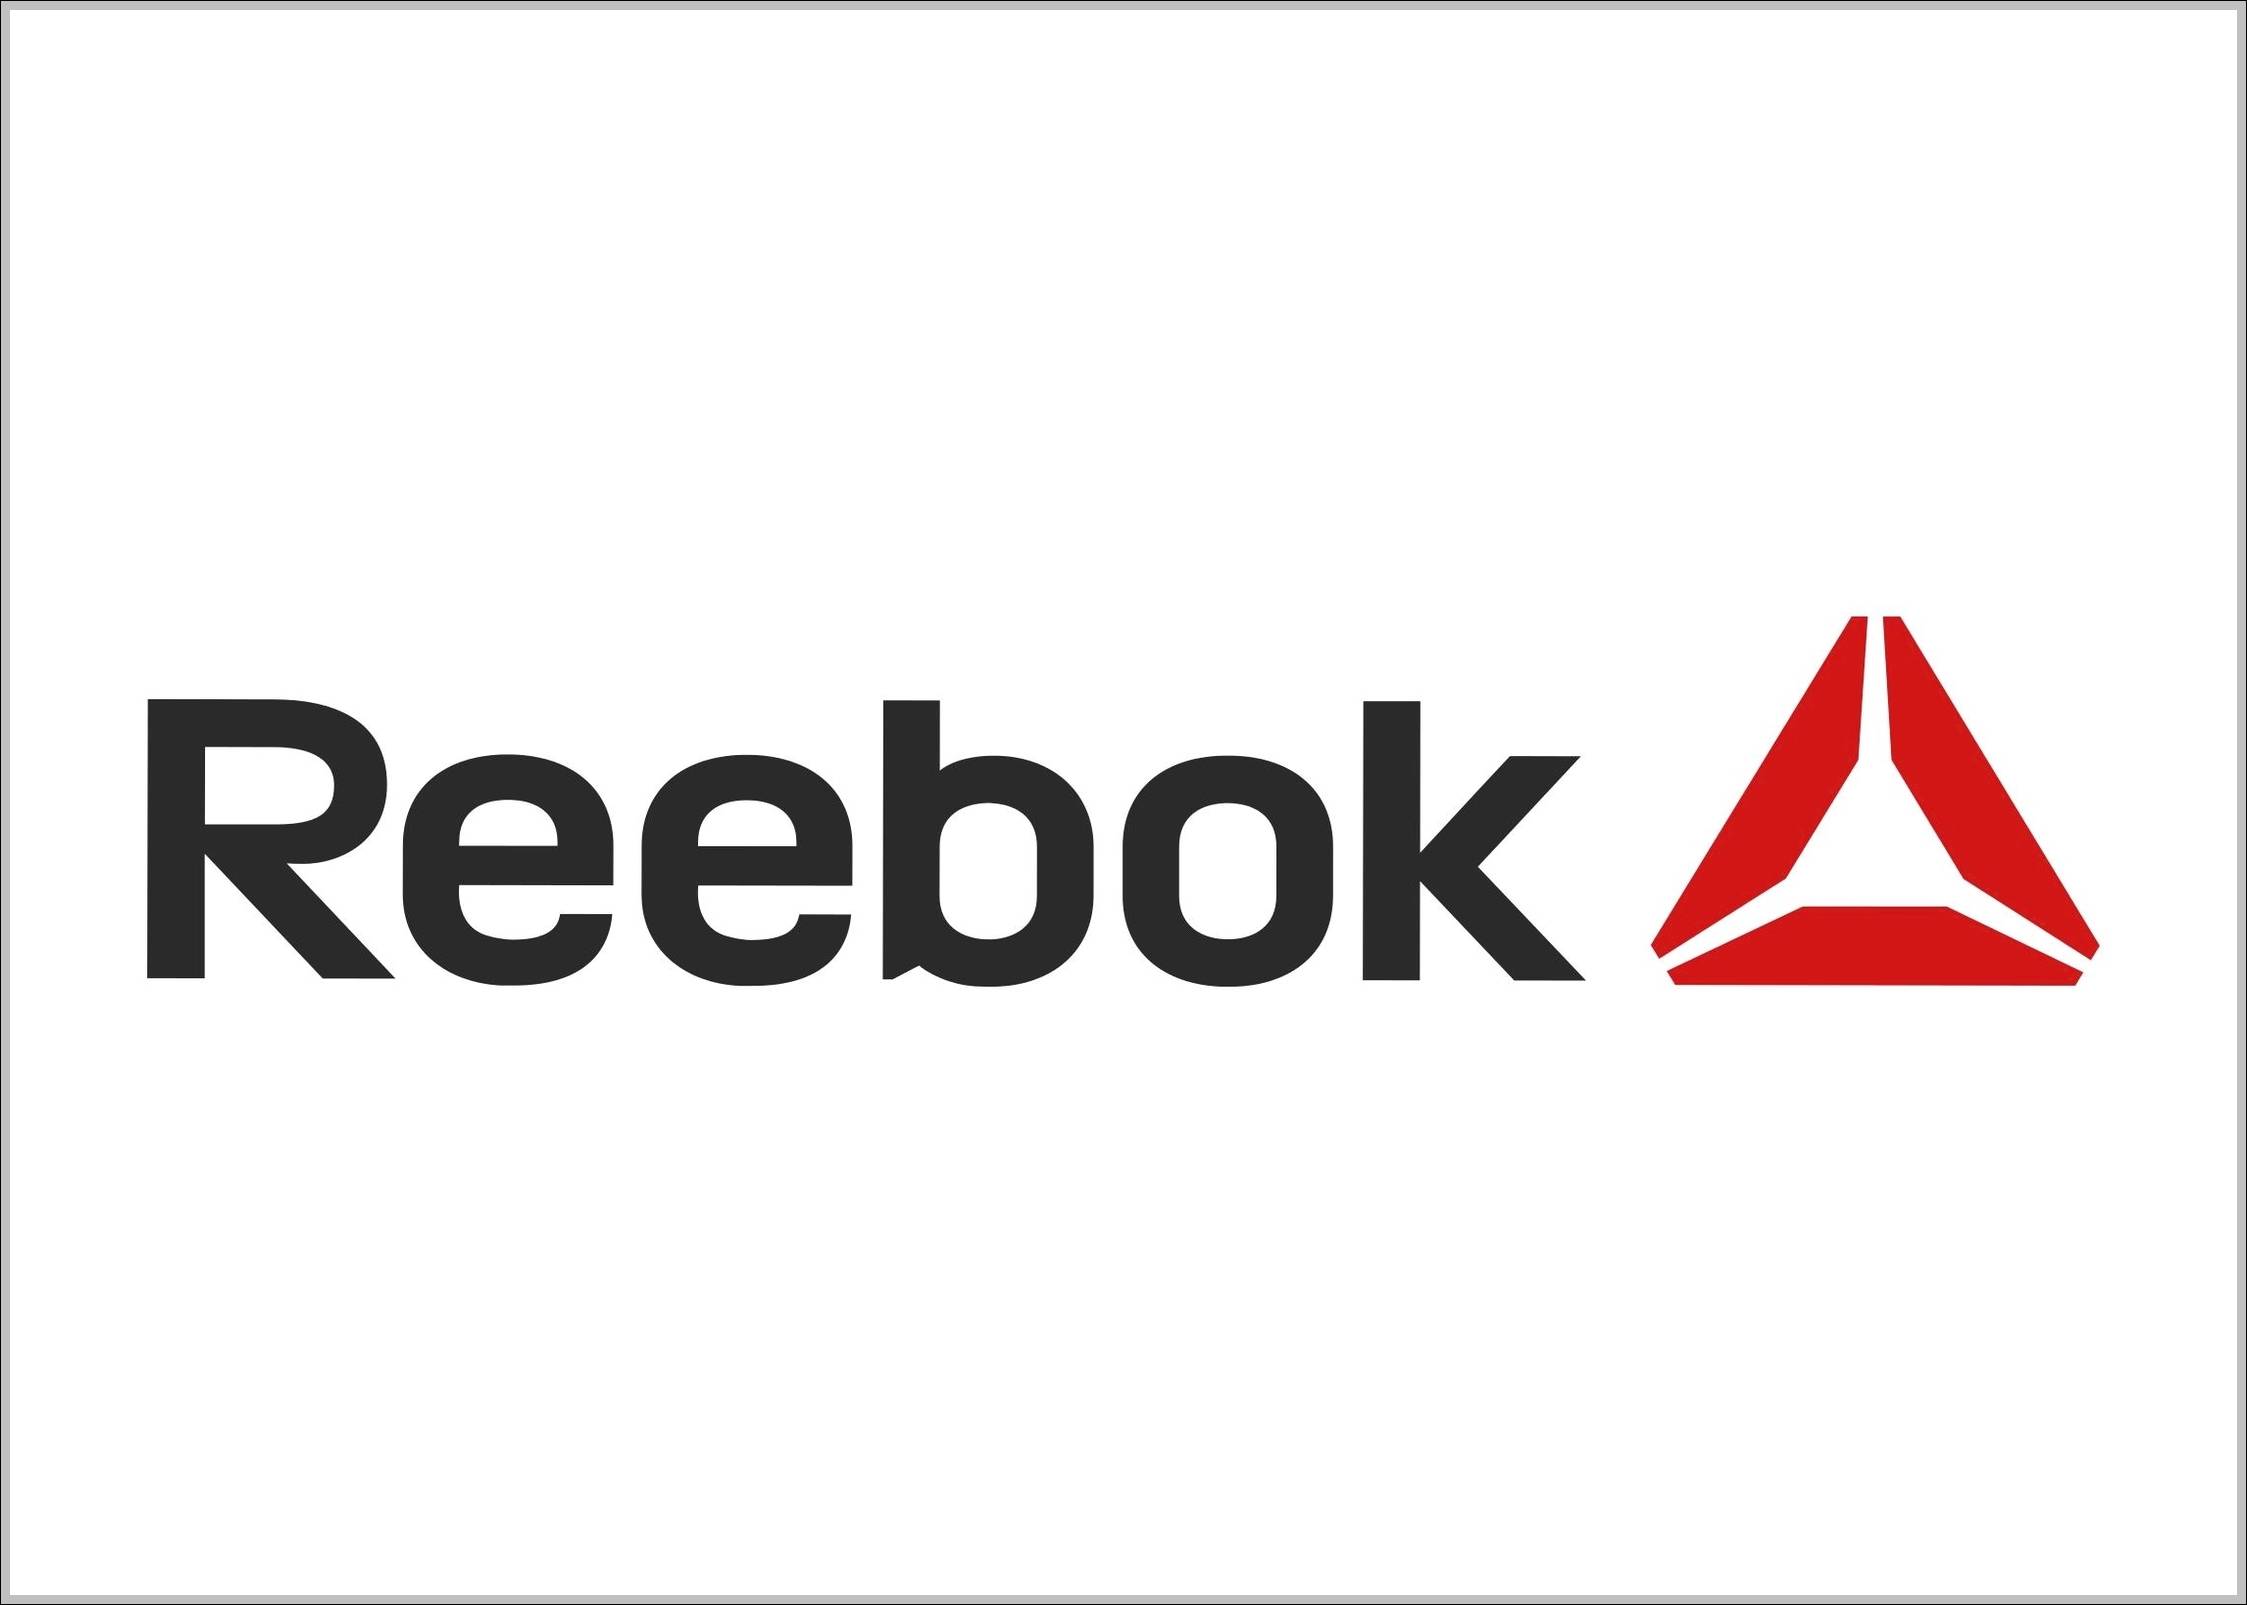 Reebok logo 2014